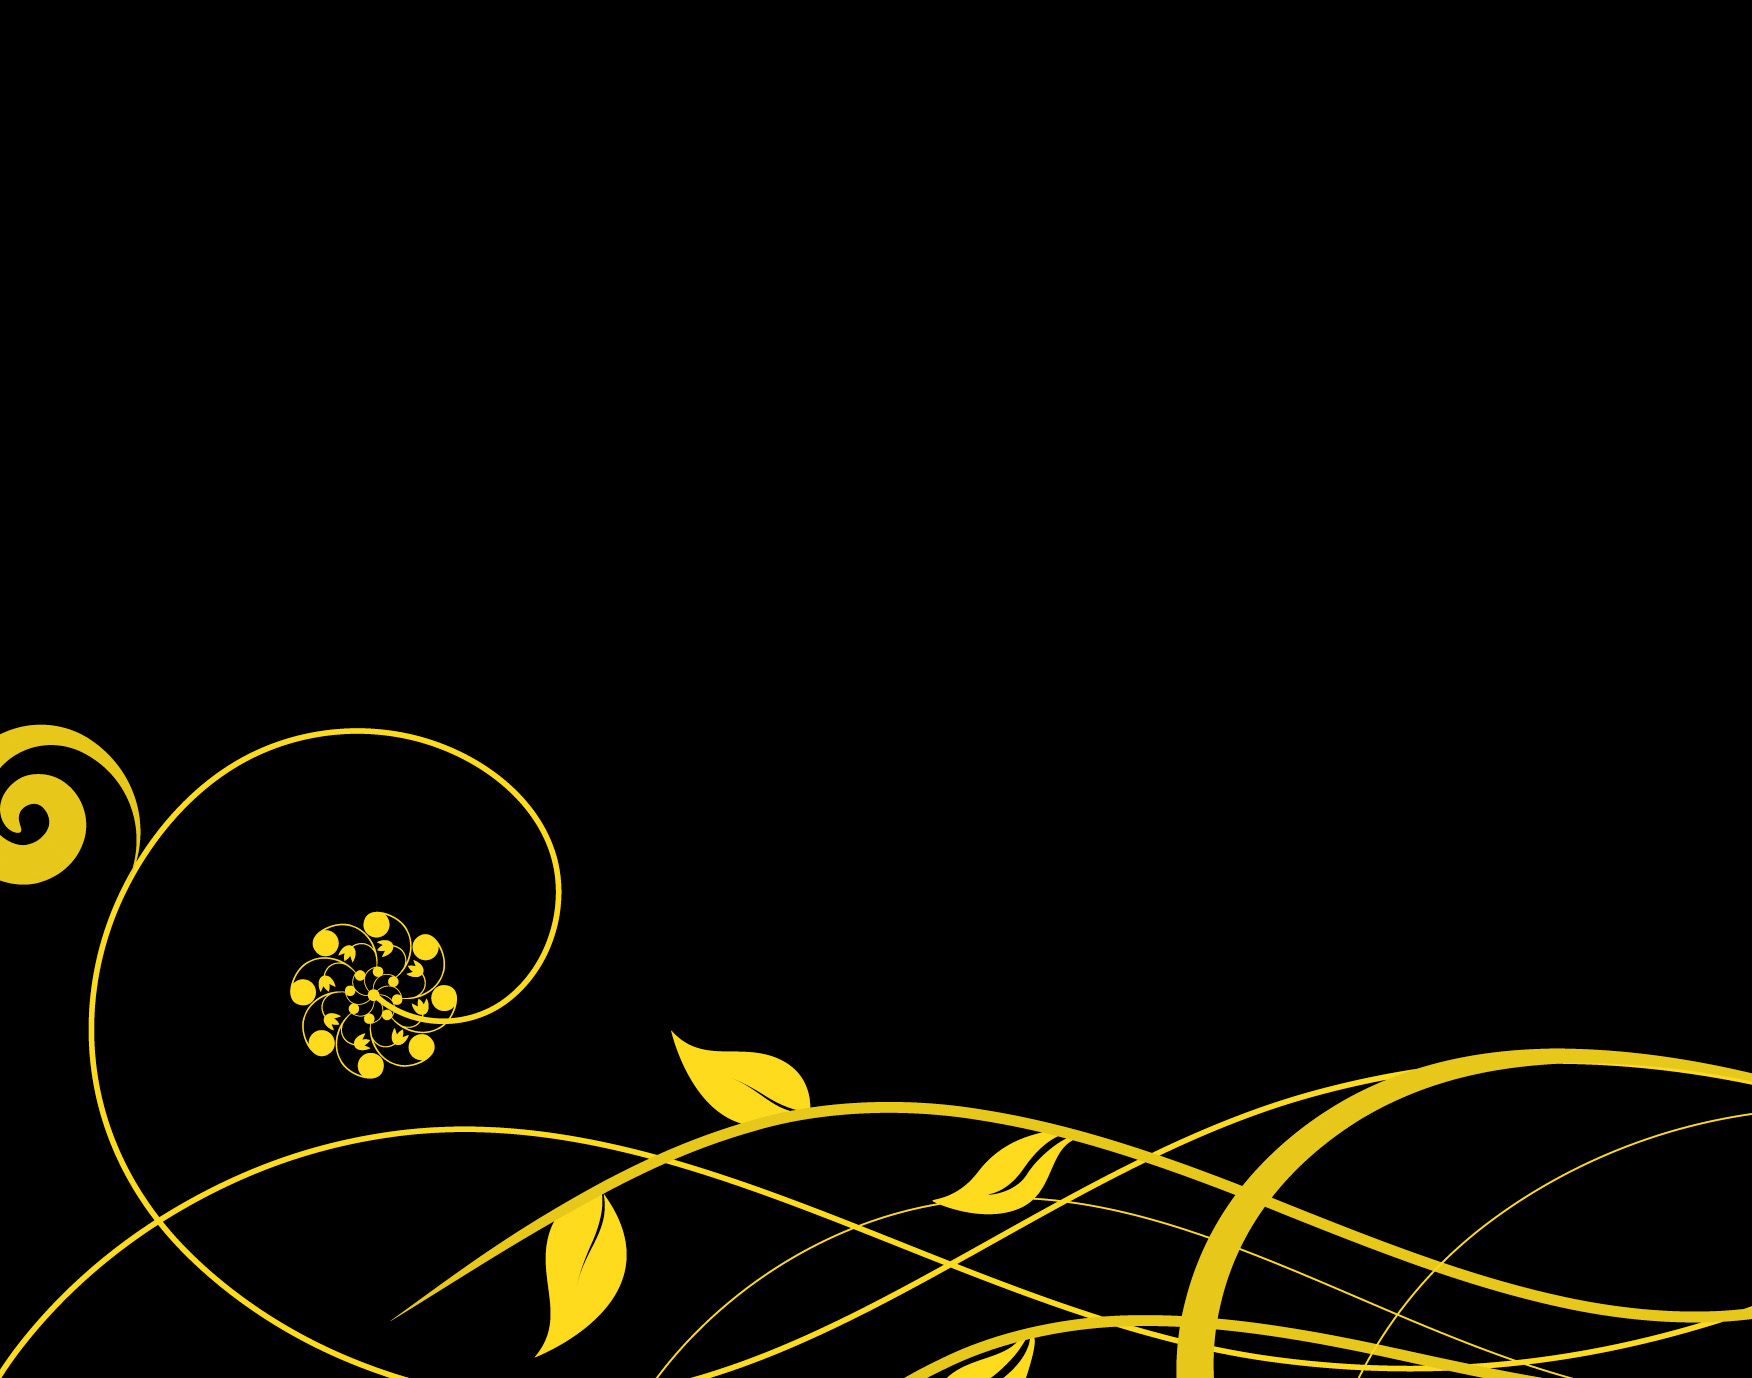 Black and Gold Background Designs   Nailartdesignsideainfo via